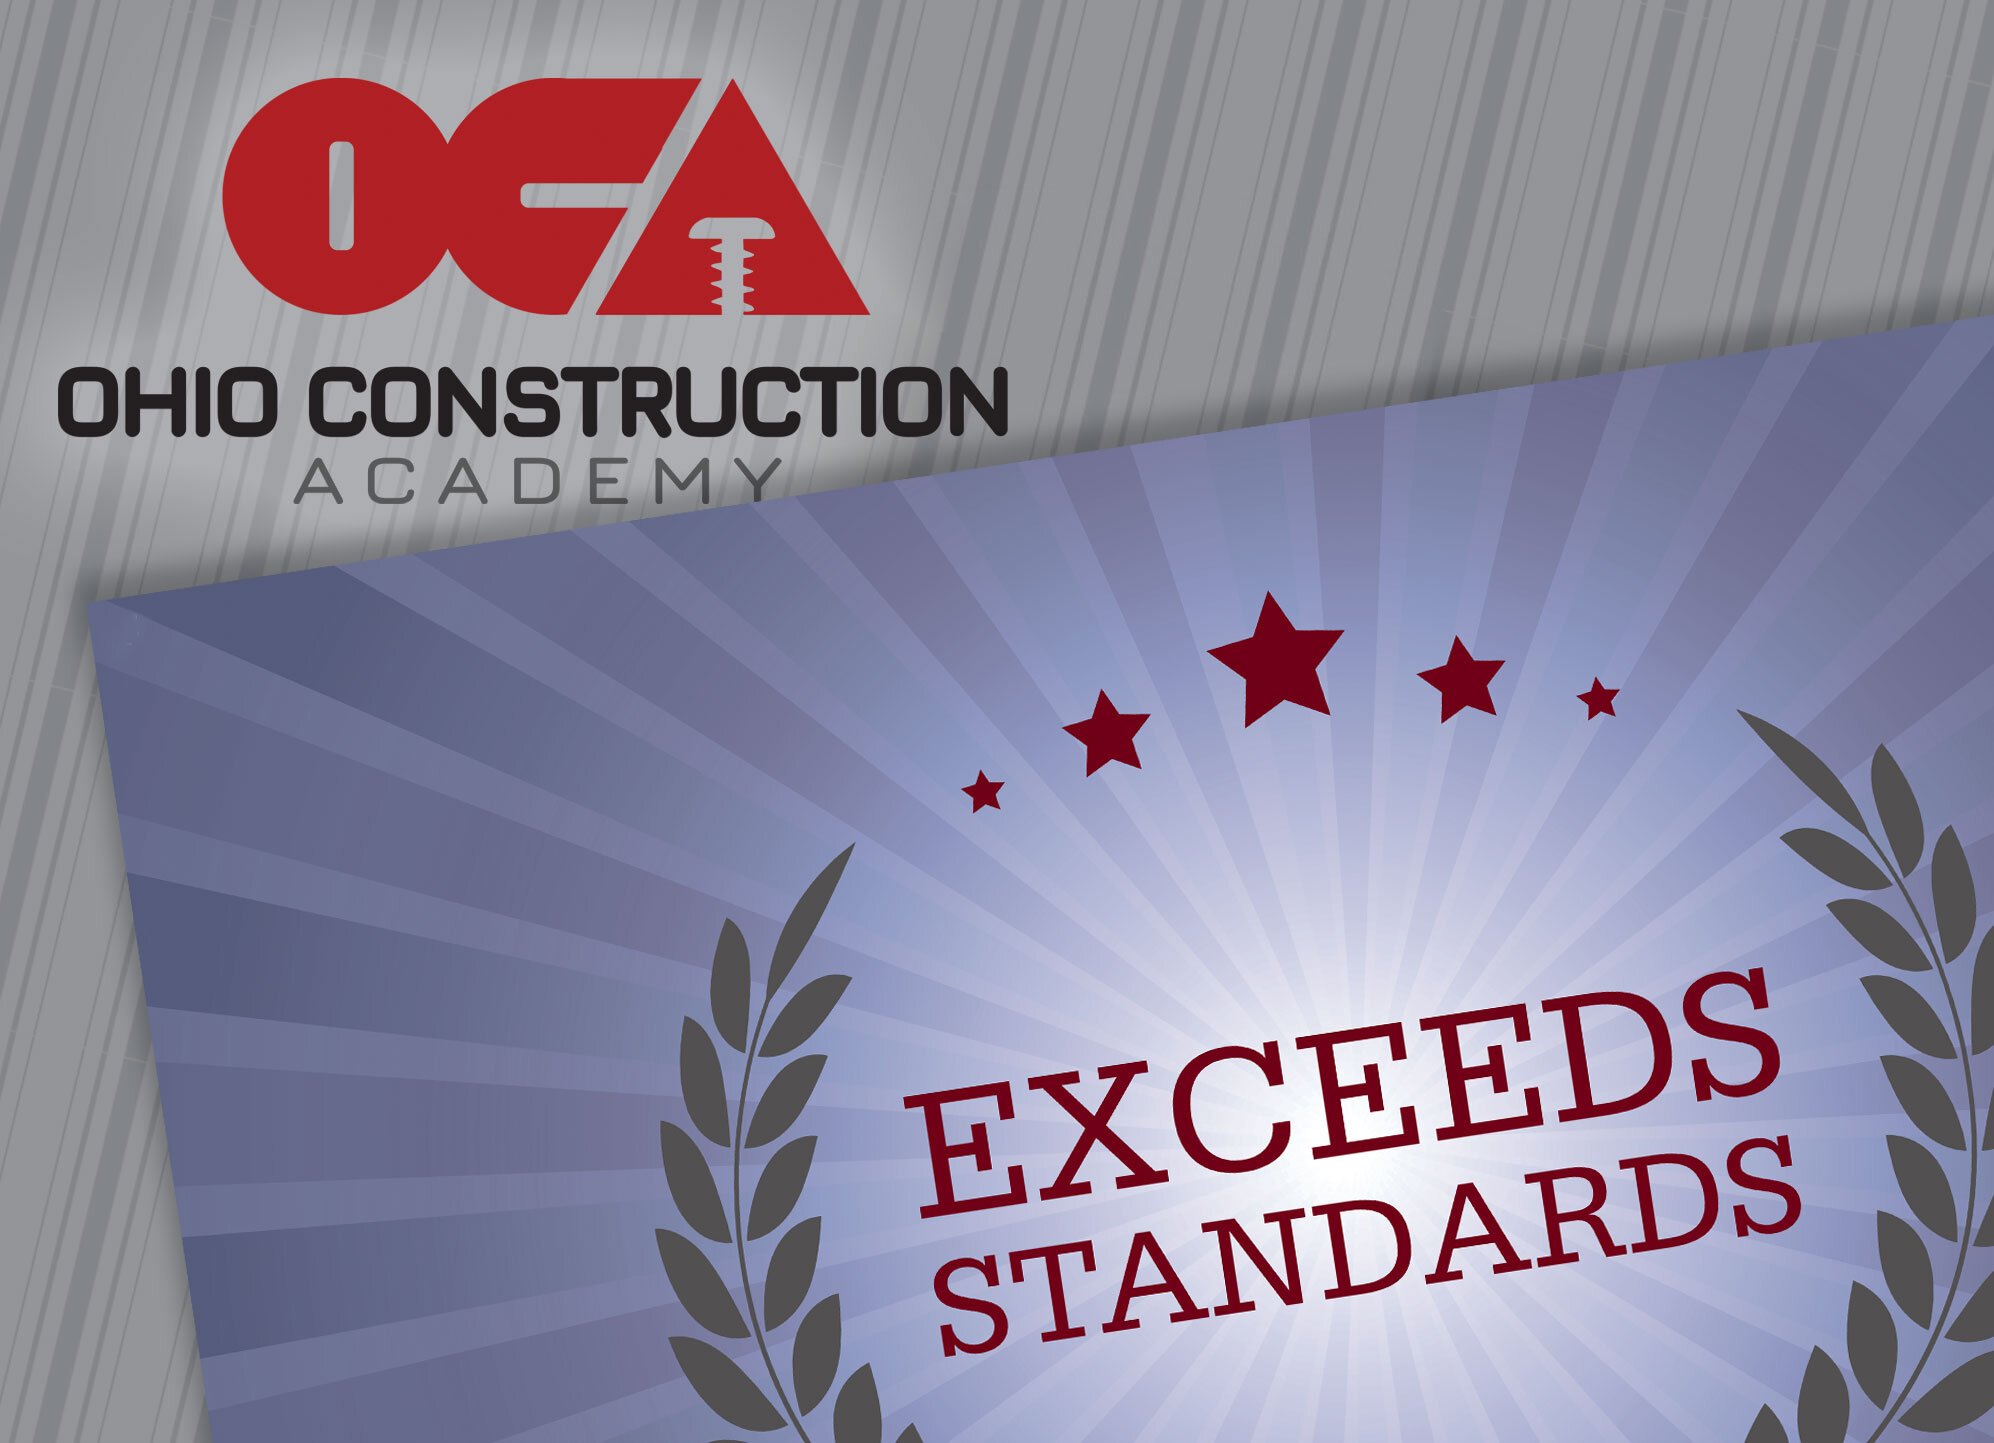 Ohio Construction Academy Exceeds Standards